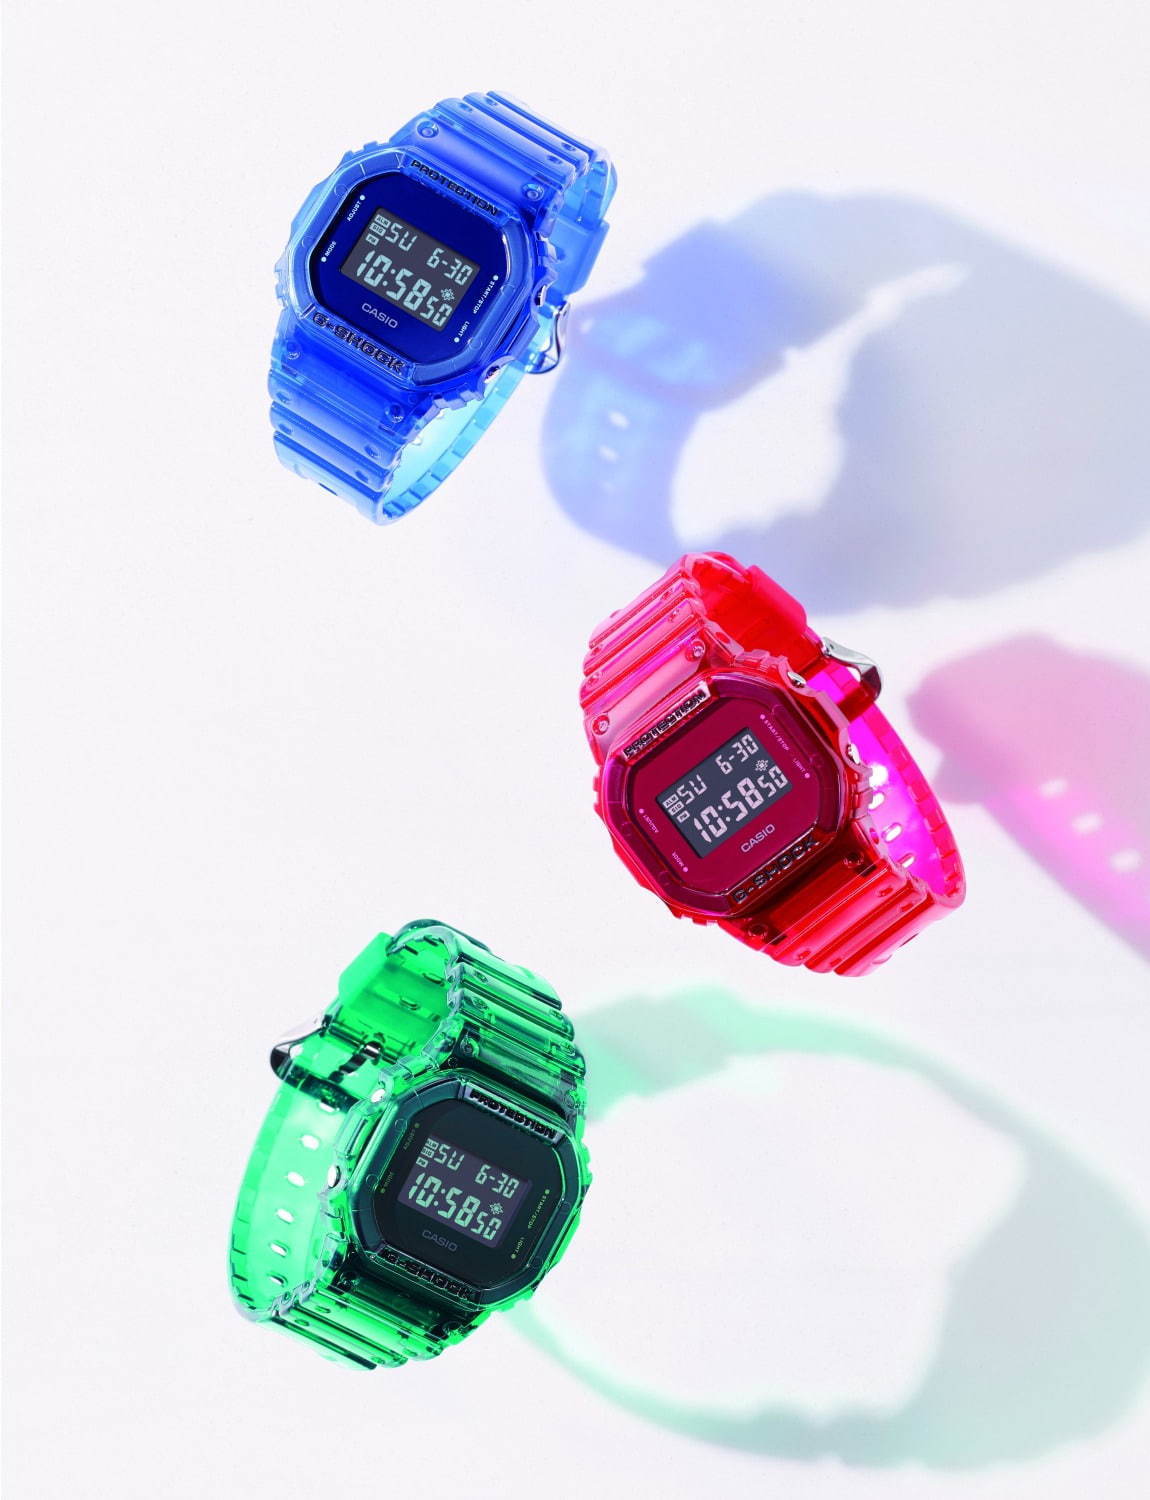 G-SHOCKからスケルトン素材の新作腕時計、名作「DW-5600」がベース 